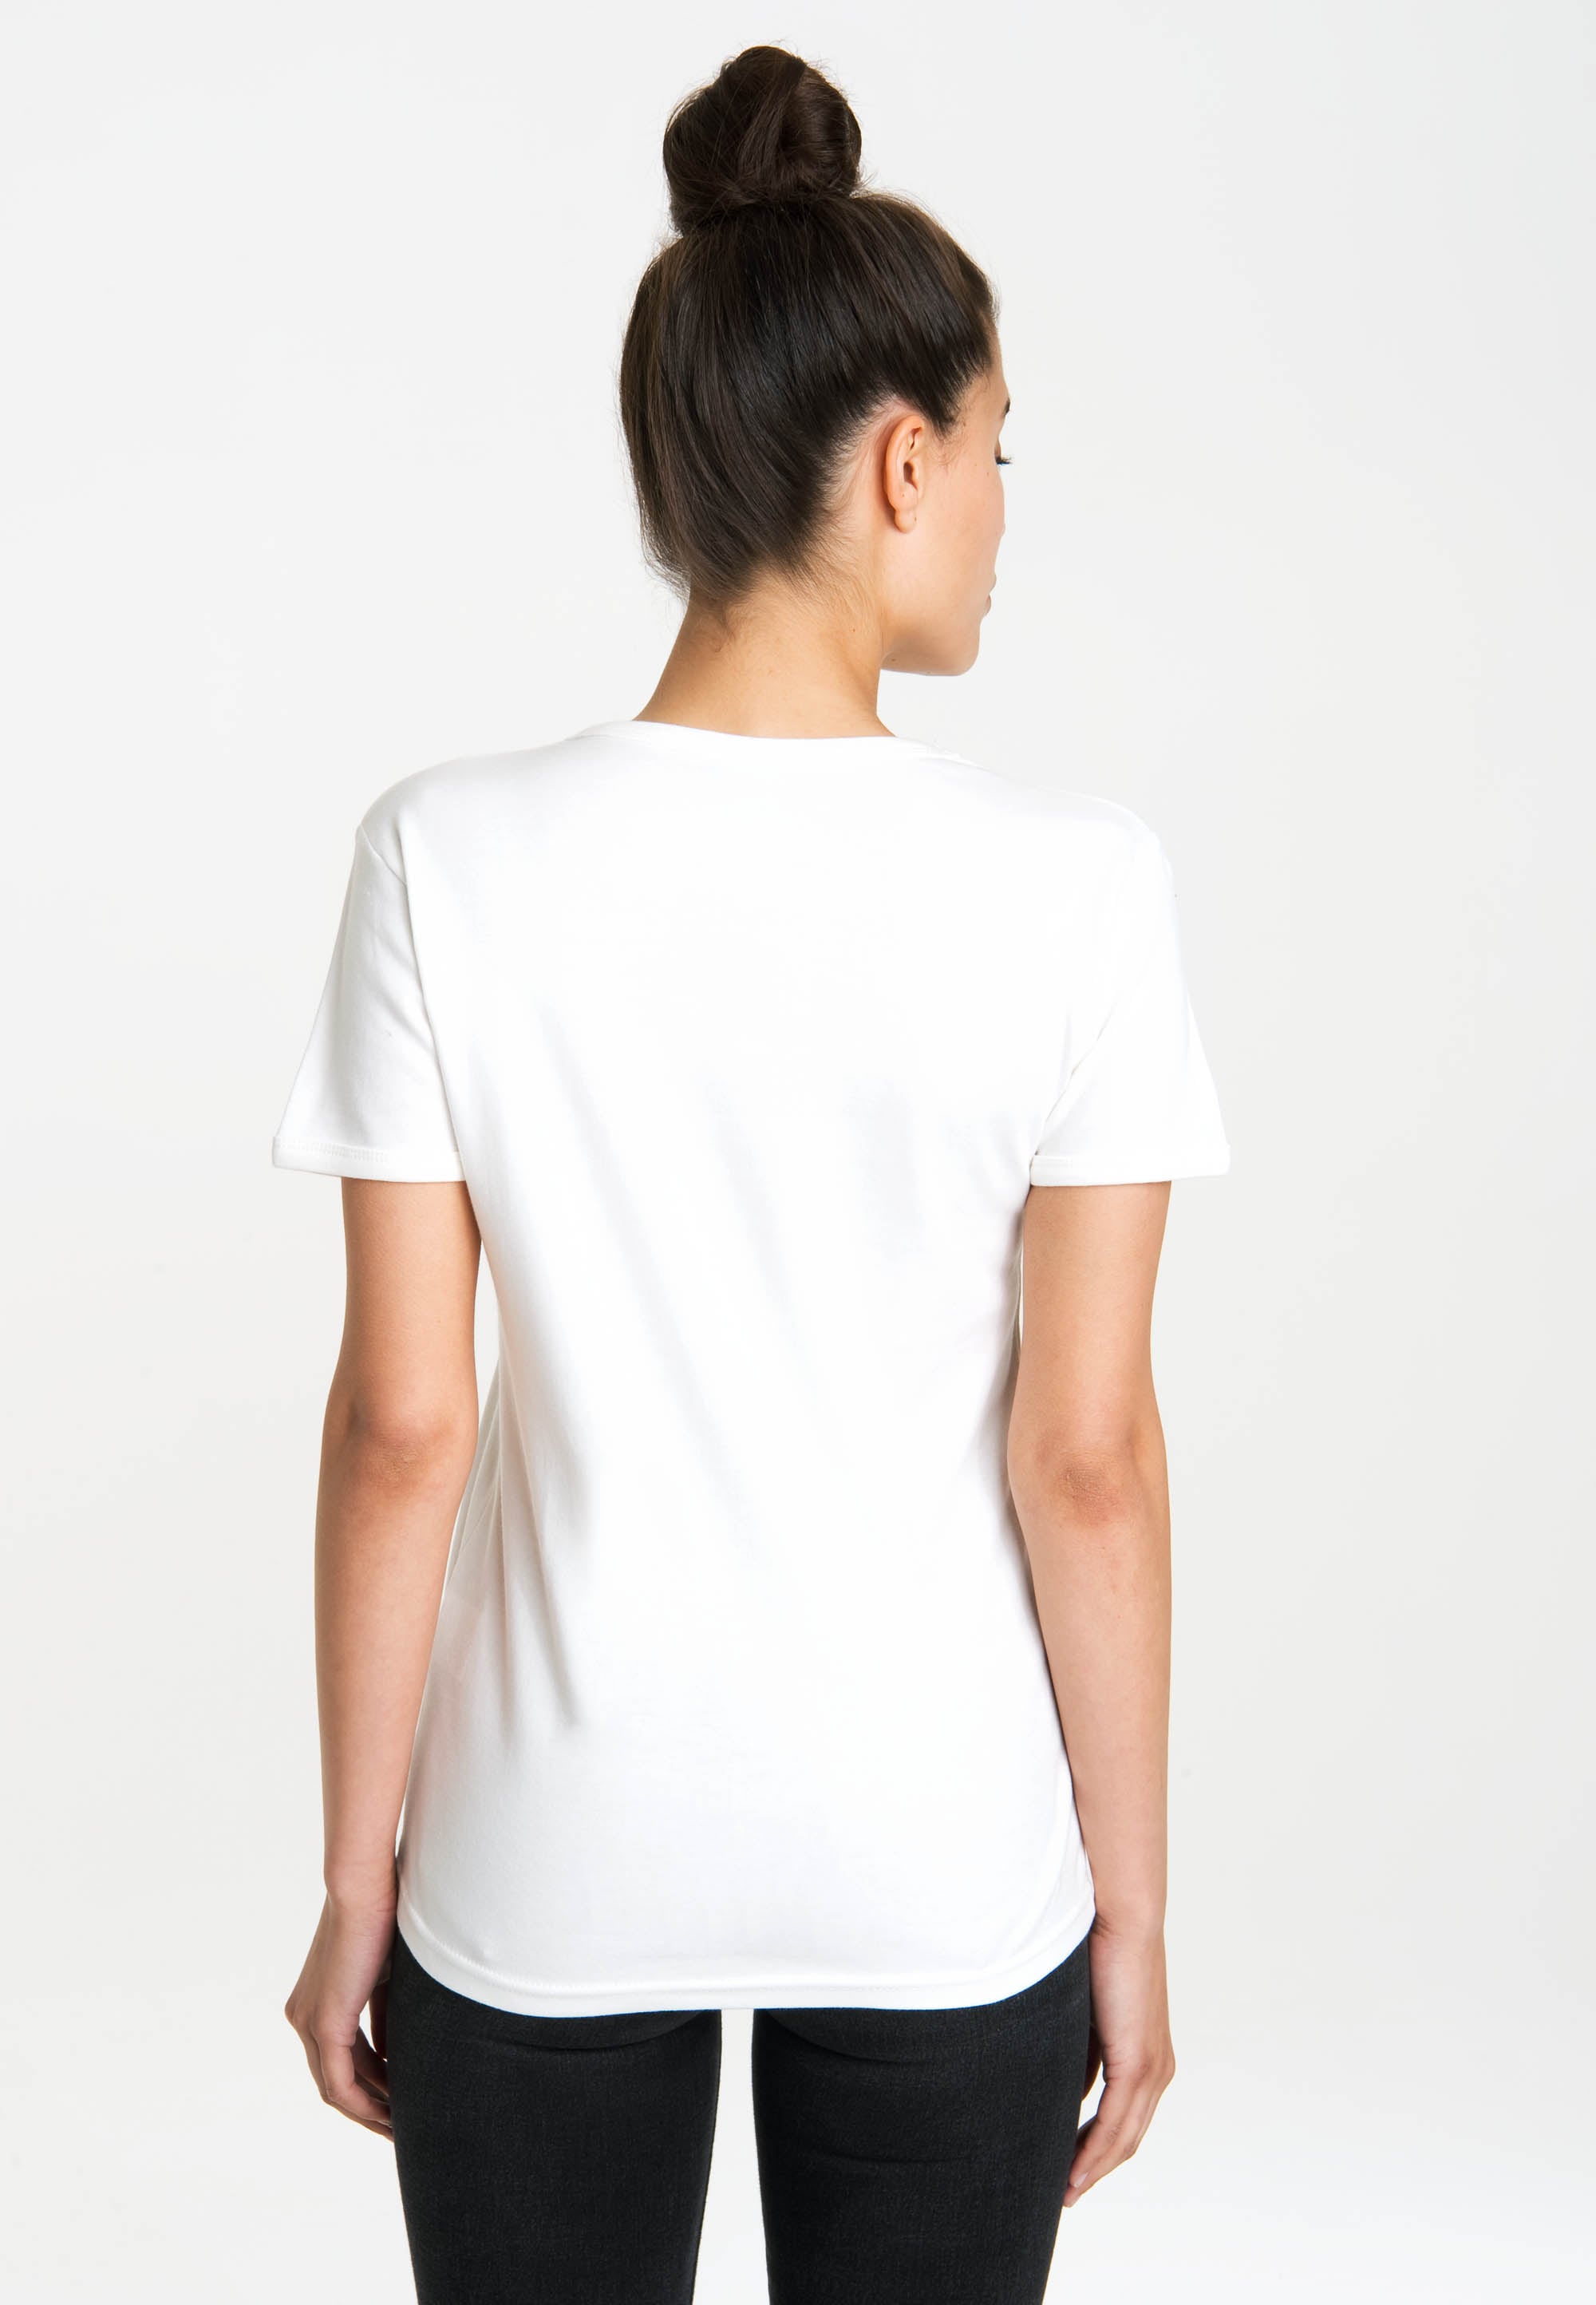 »Droids«, lizenzierten T-Shirt LOGOSHIRT | Originaldesign I\'m kaufen walking mit